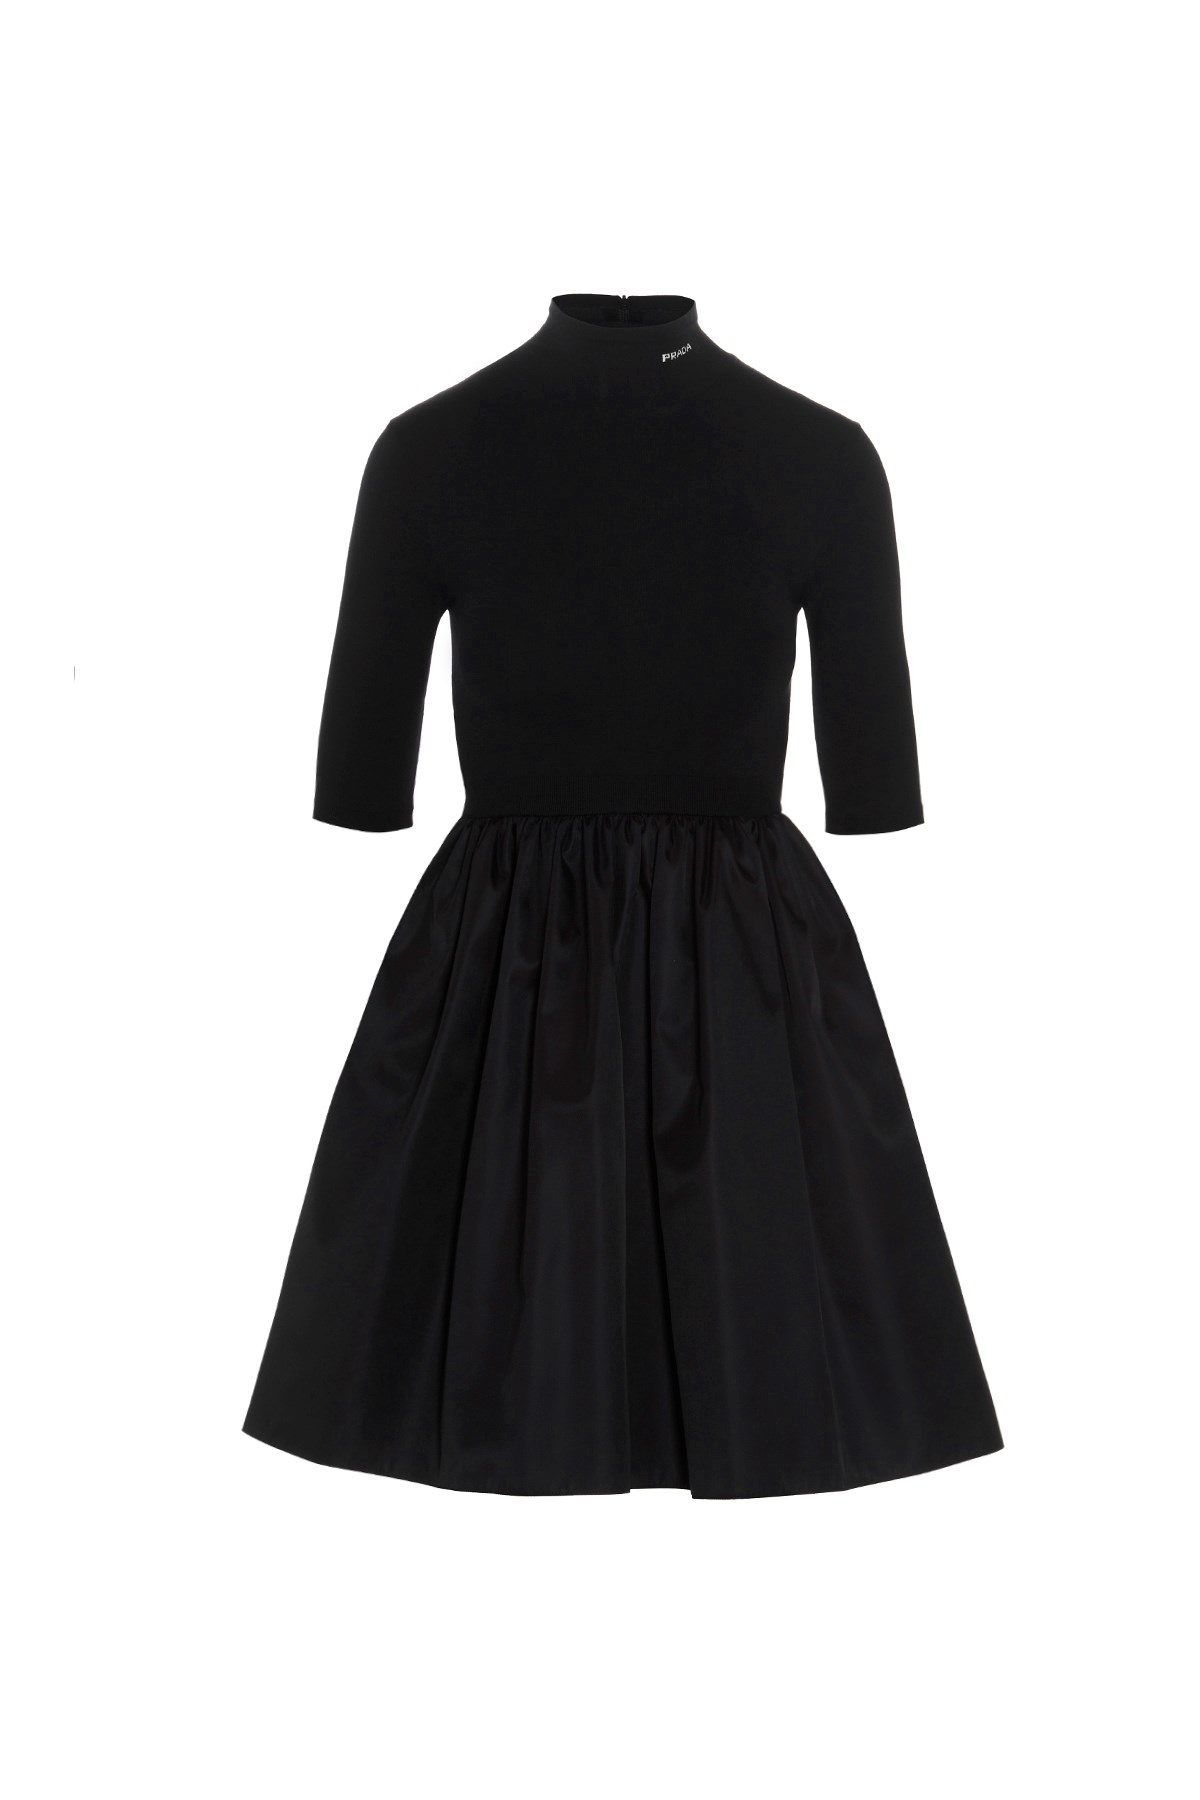 PRADA Re-Nylon Virgin Wool Dress